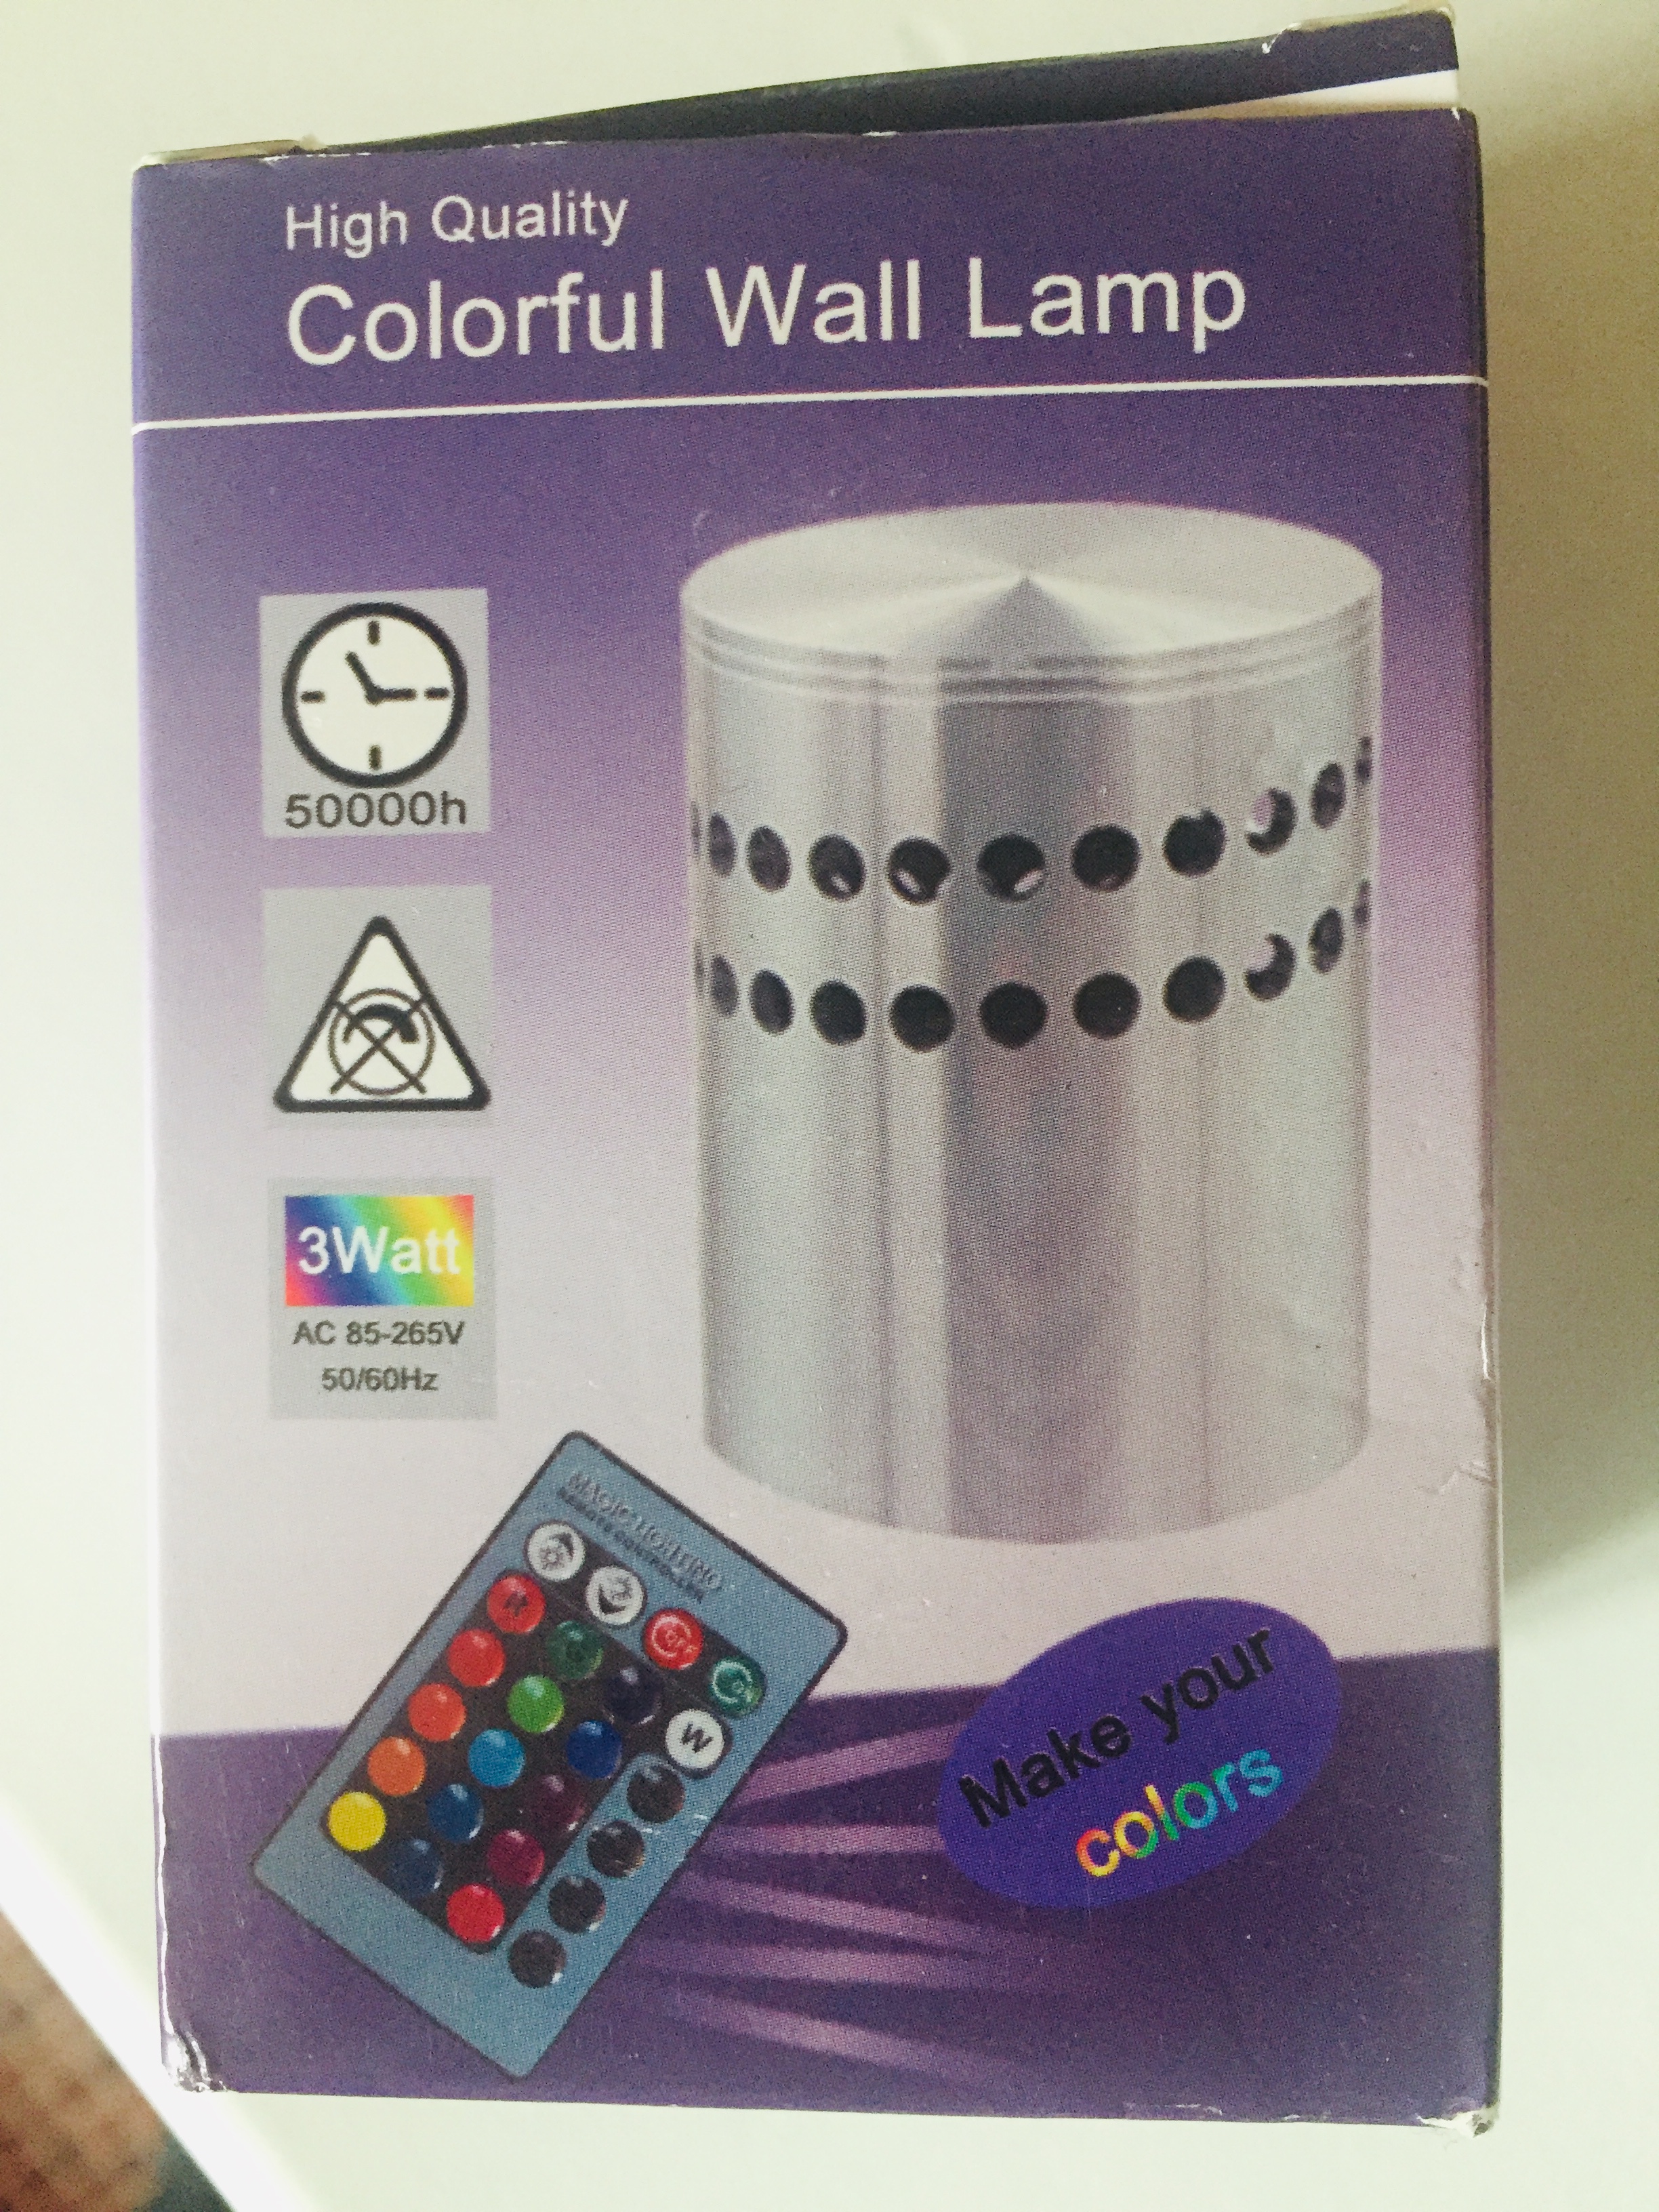 LED Spiral wall lights 7E4ECBEB-8221-4820-AC68-36C1BD3A5B85 - EletriciansForums.net